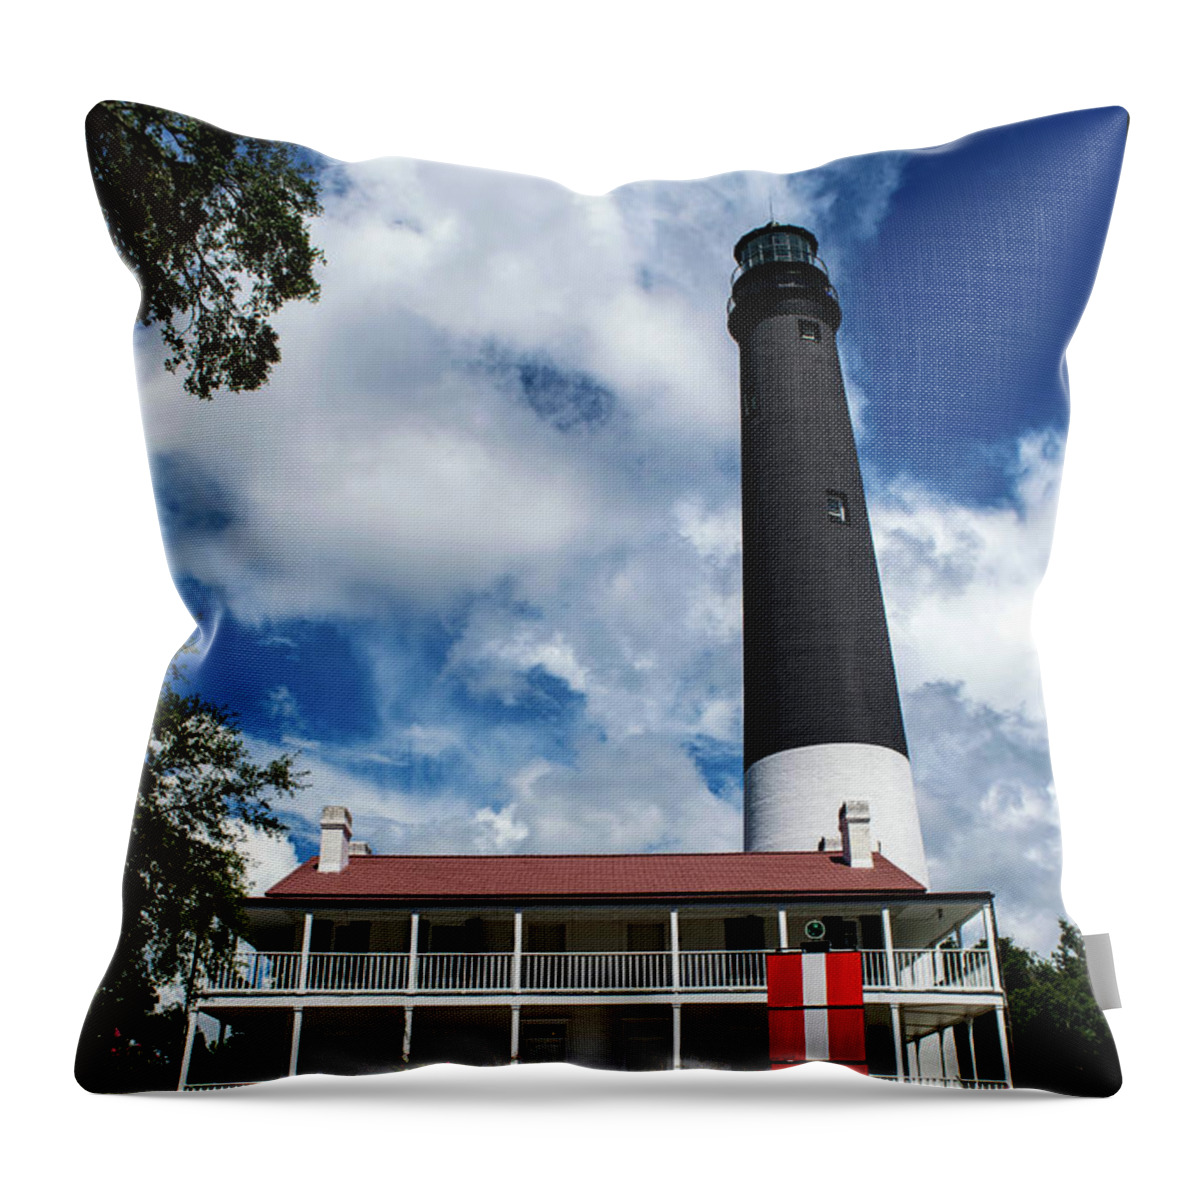 Pensacola Throw Pillow featuring the photograph Pensacola Florida Lighthouse by Beachtown Views